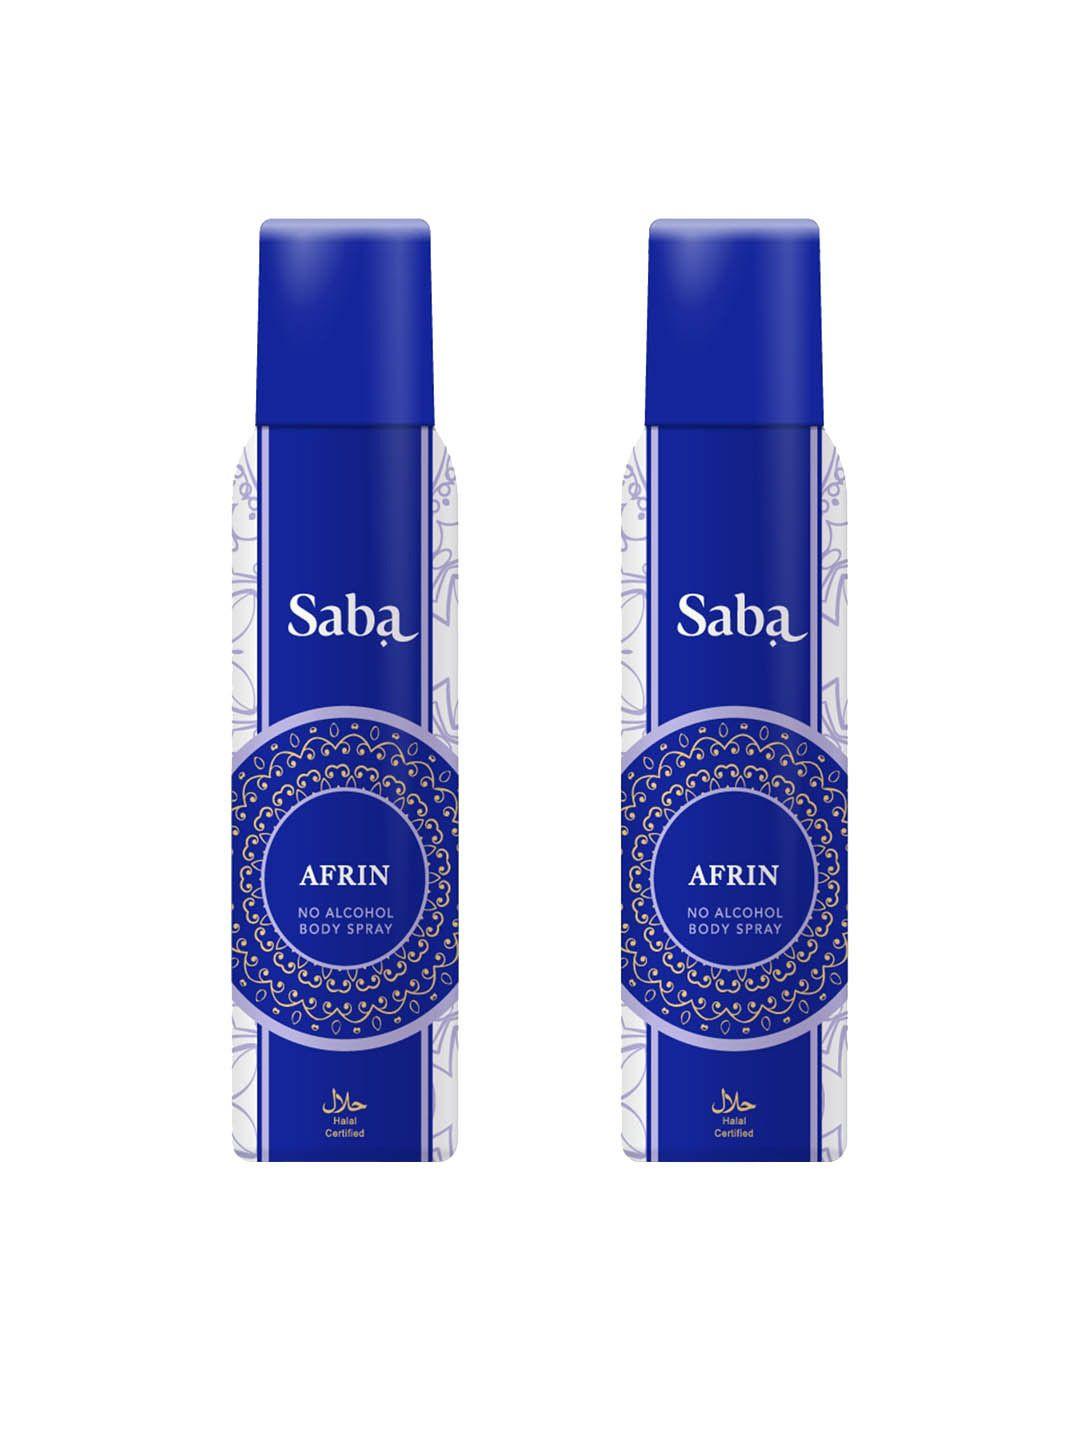 saba women set of 2 afrin no alcohol deodorant body spray - 150 ml each